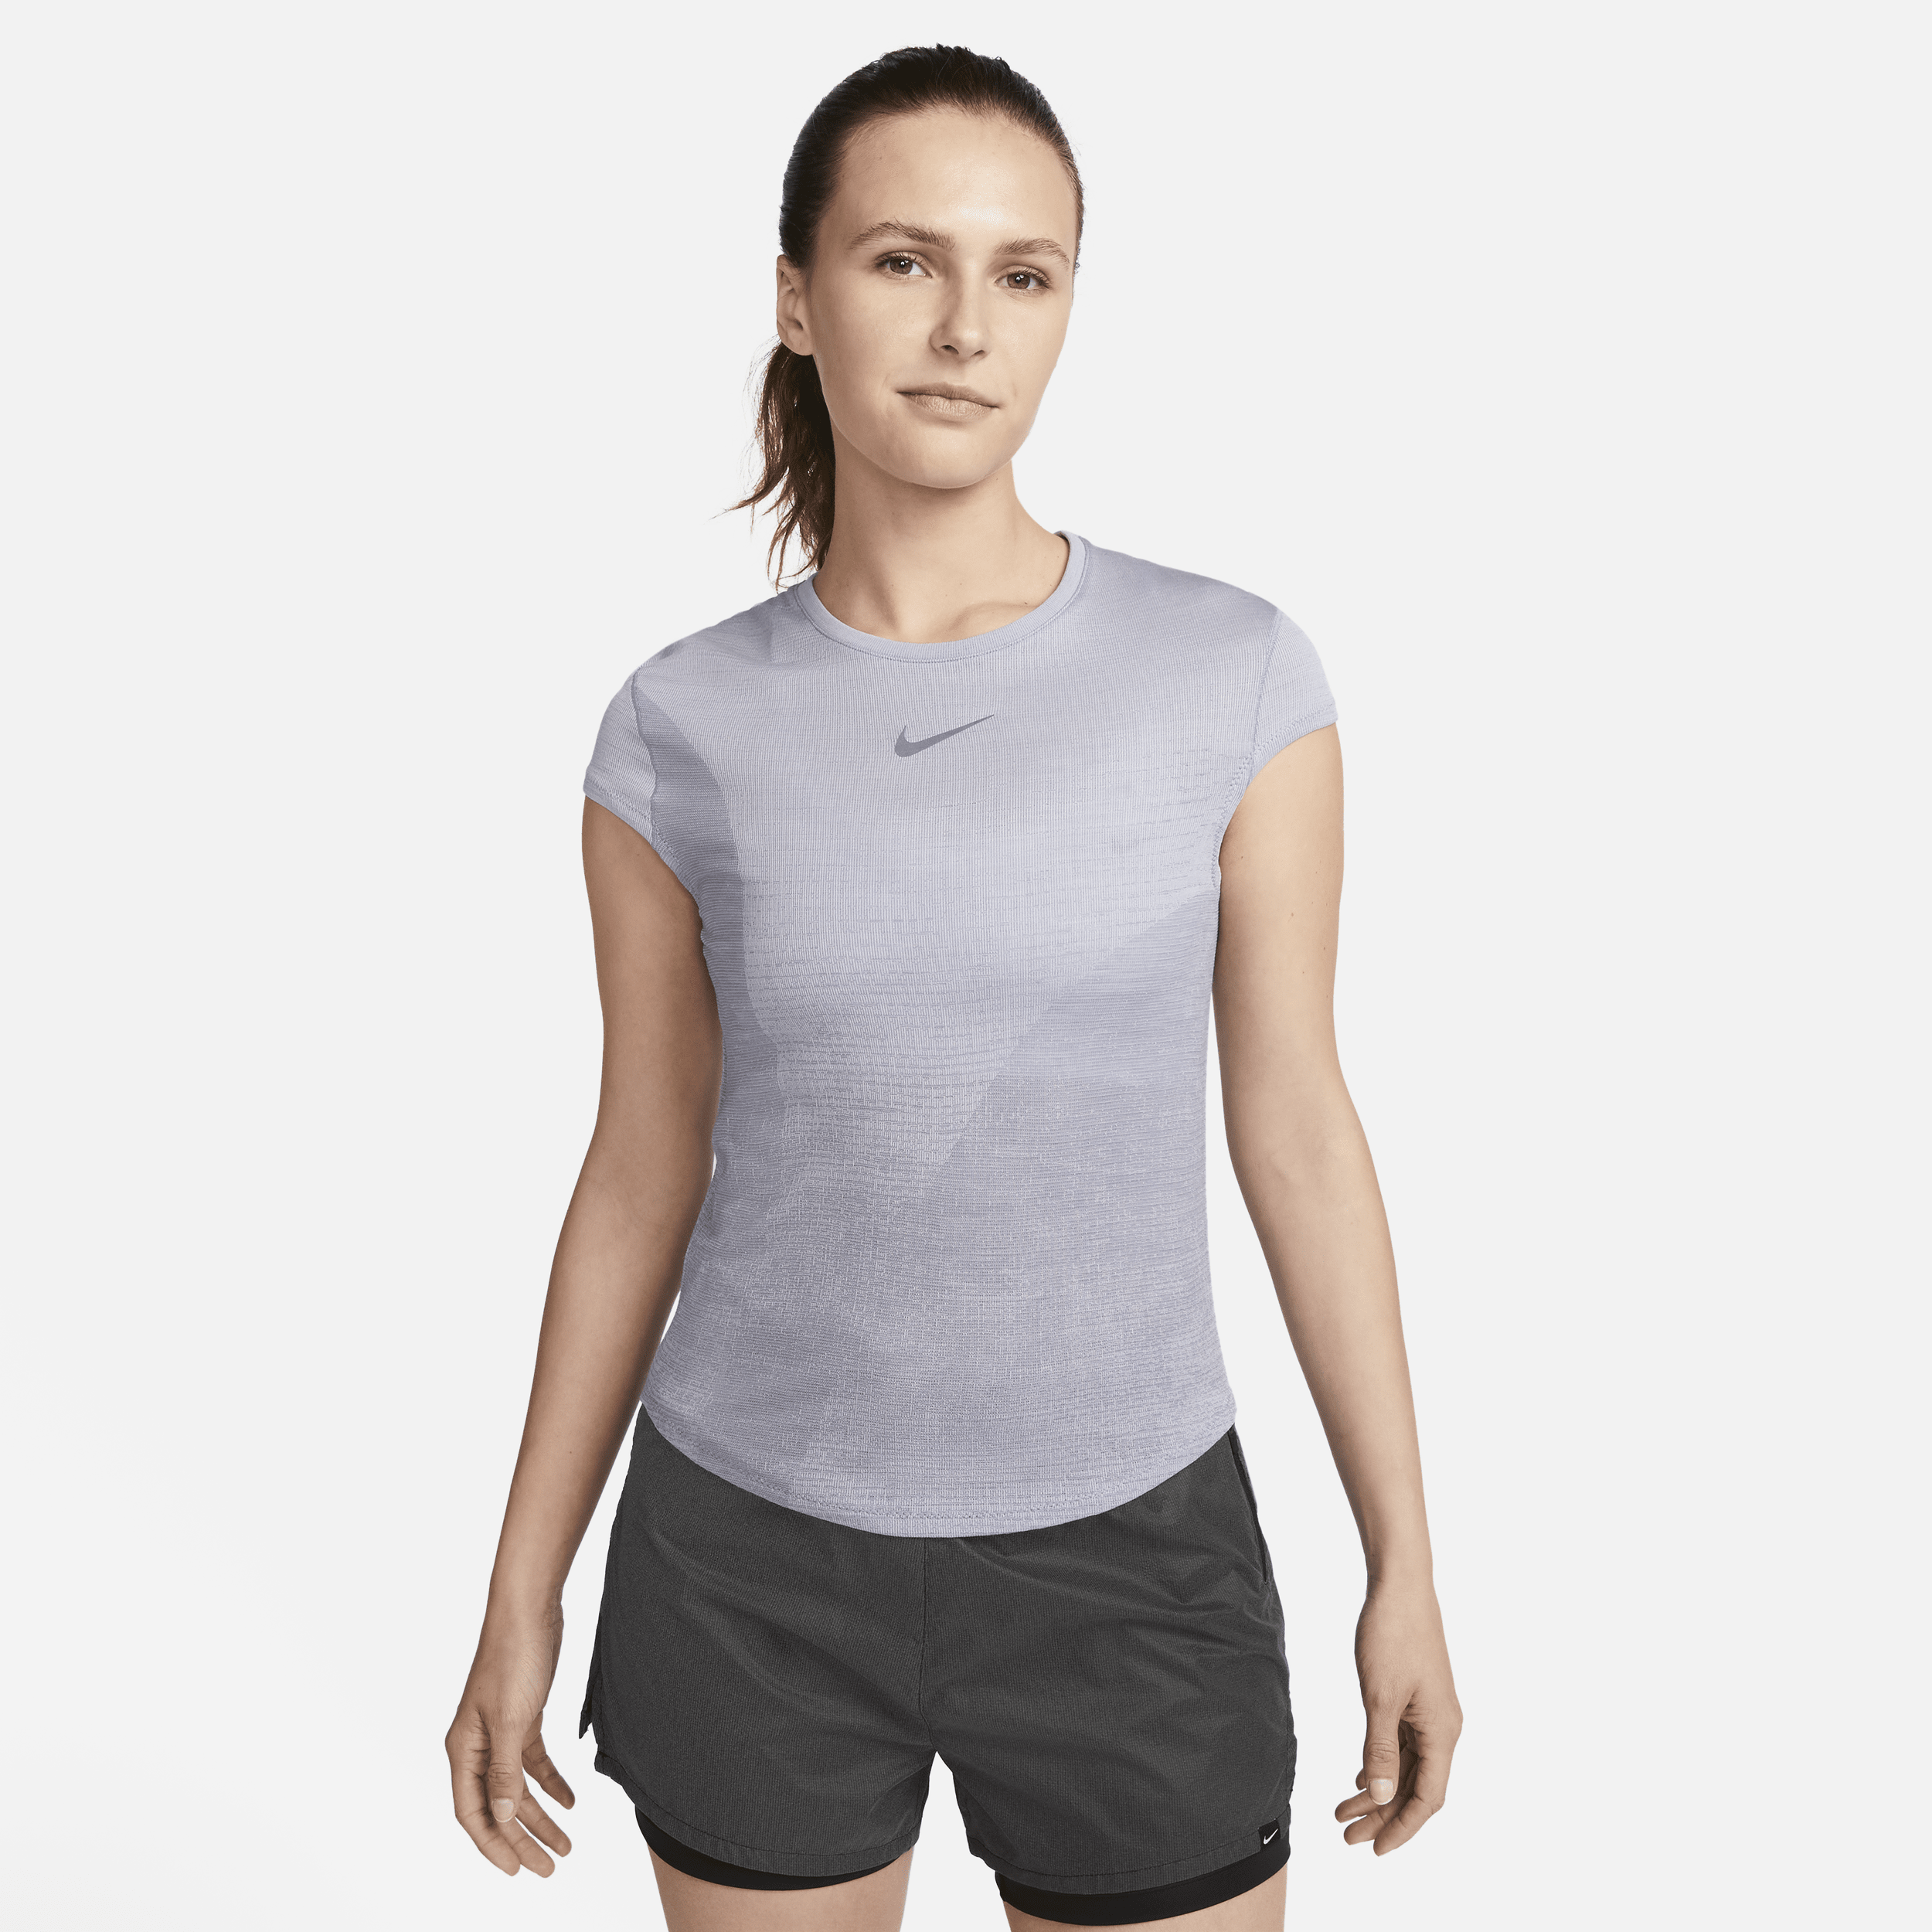 Nike, Tops, Nike Womensdrifit 34 Sleeves Yoga Shirt Size S